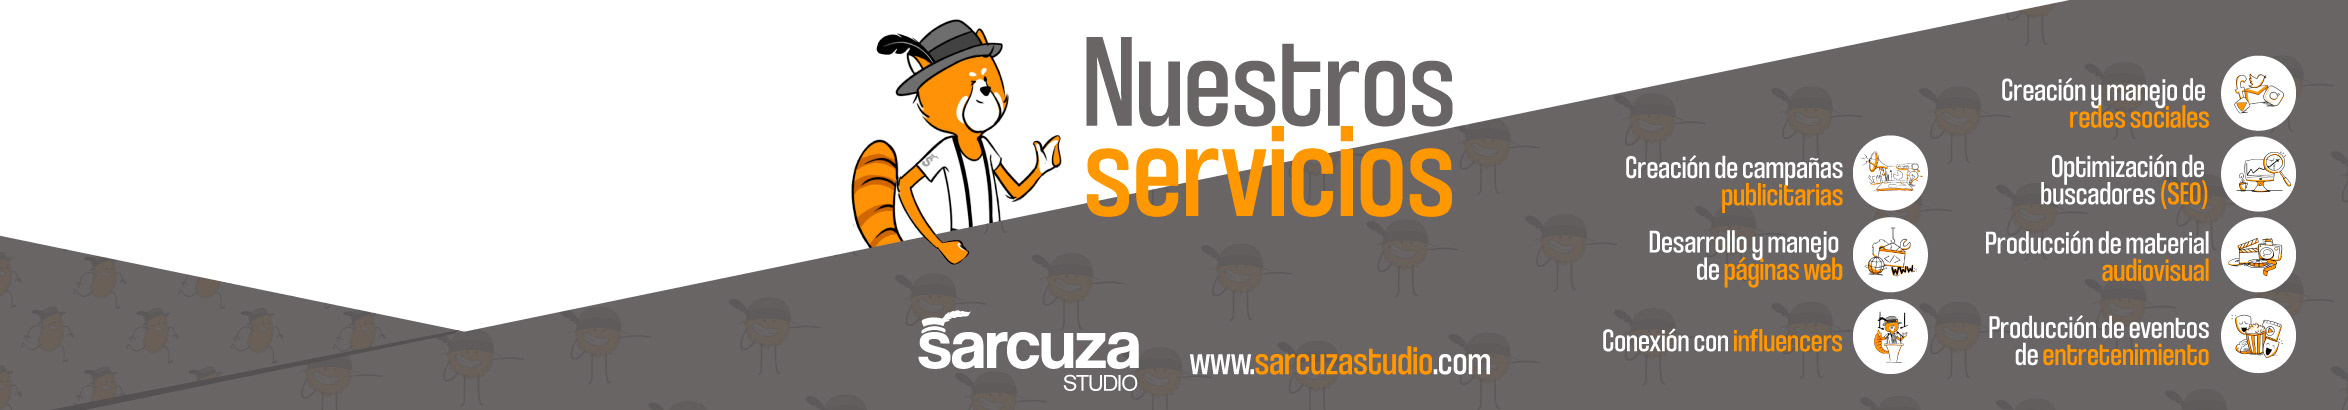 Sarcuza Studios profilbanner